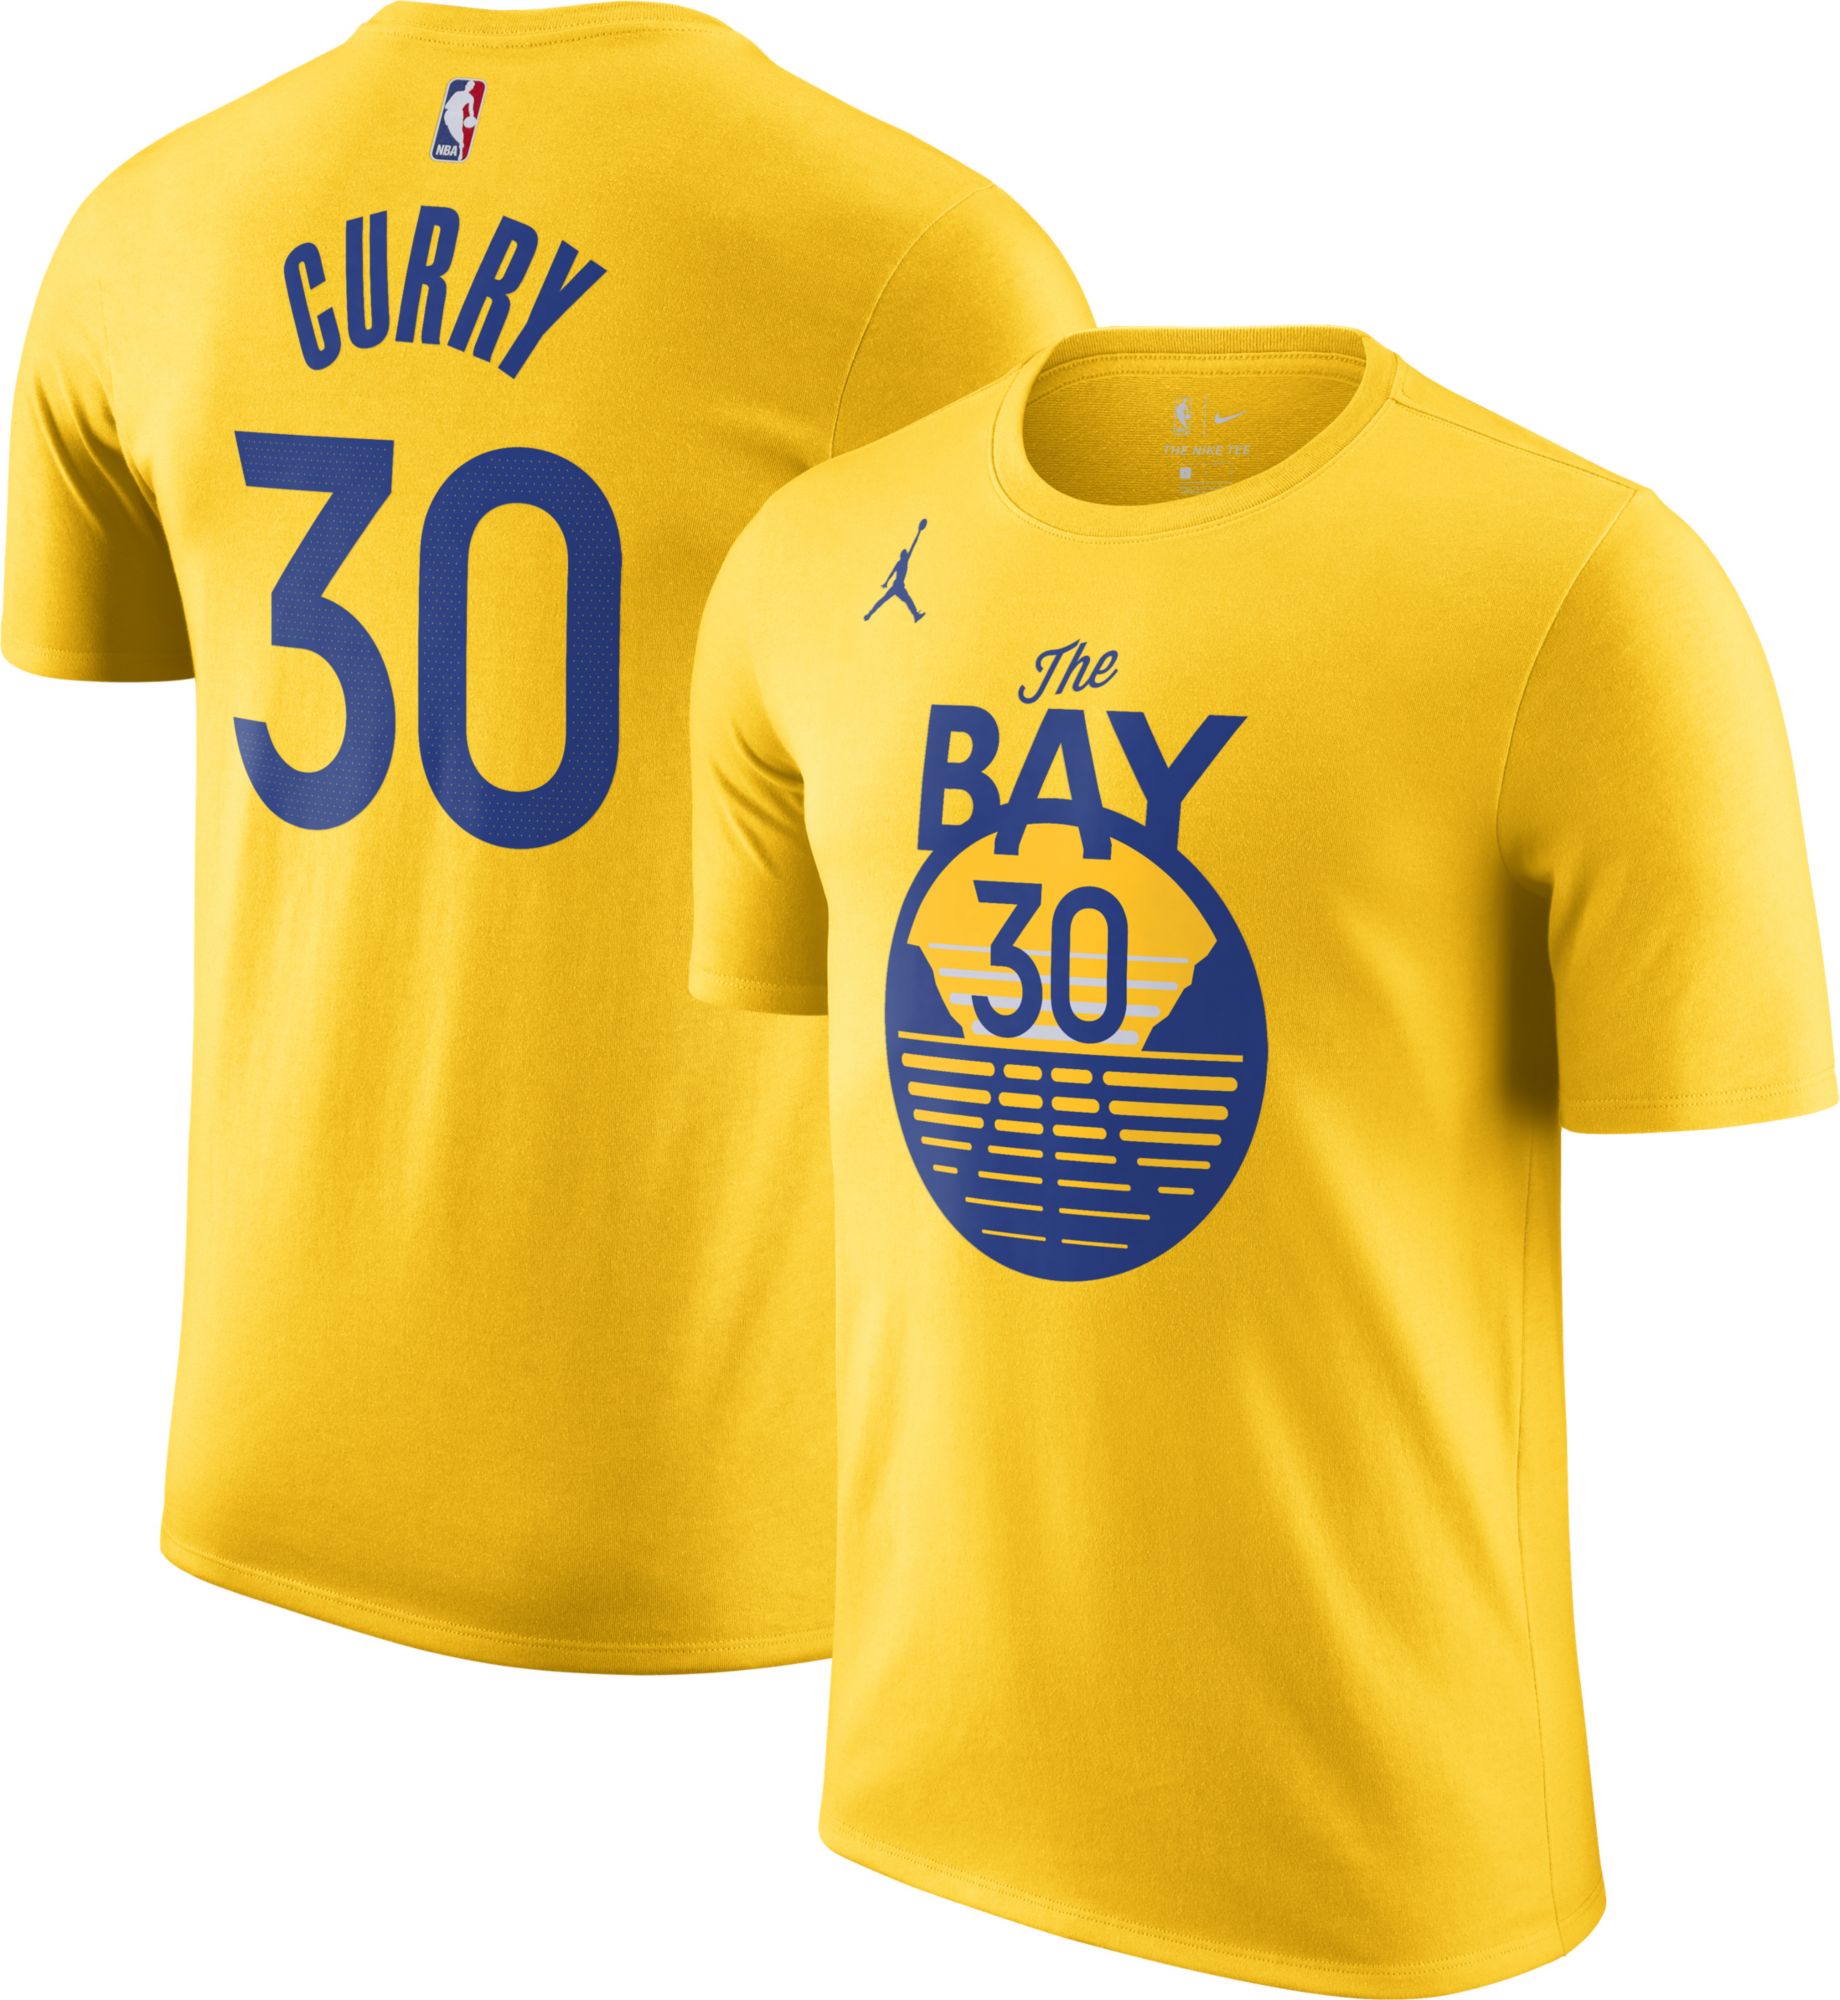 Nike Men's NBA Stephen Curry Golden State Warriors Dri-FIT T-Shirt